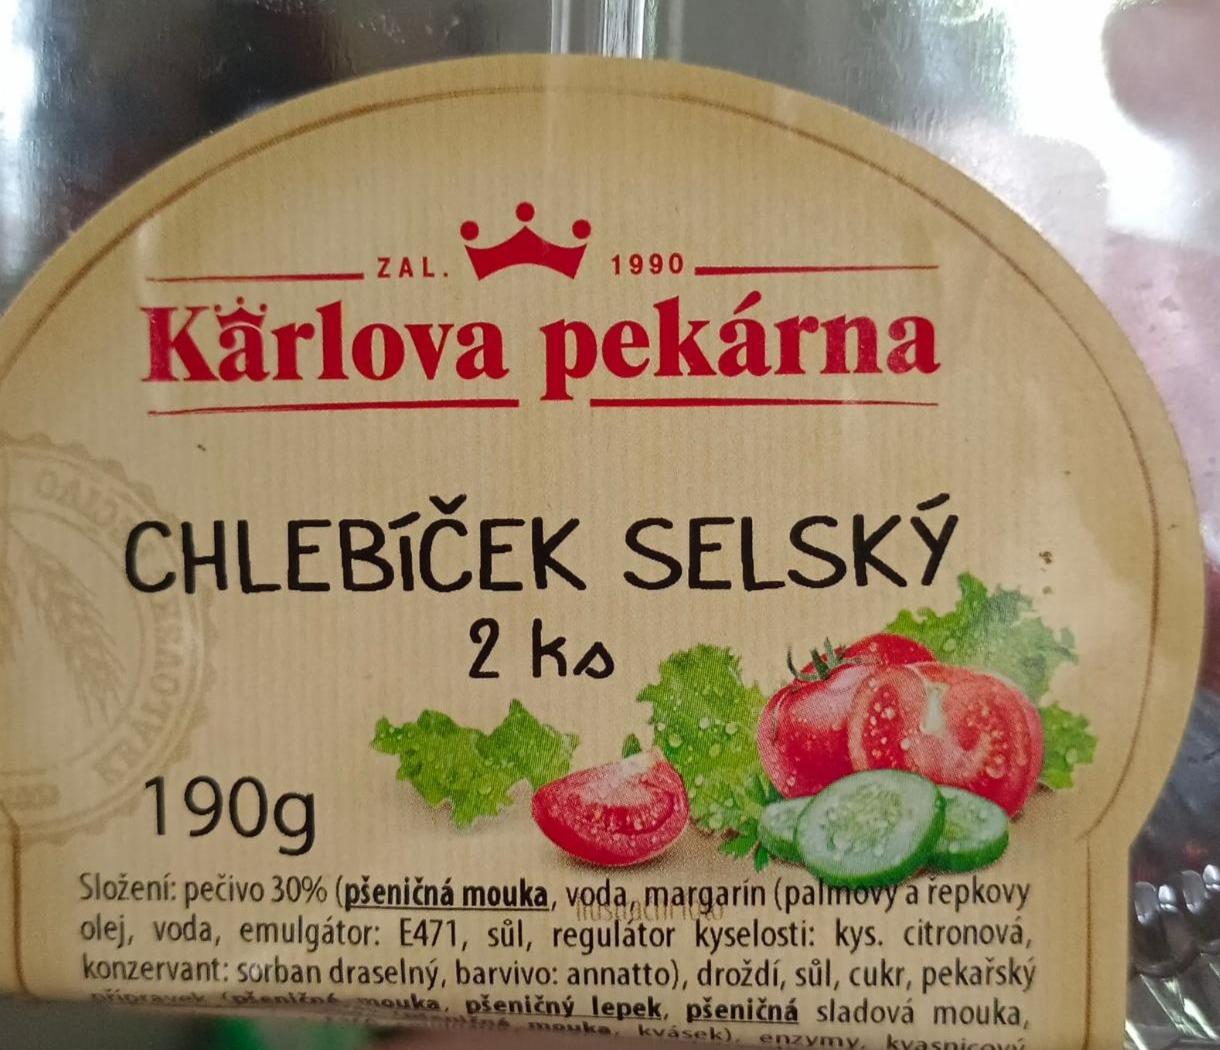 Fotografie - Chlebíček selský Karlova pekárna